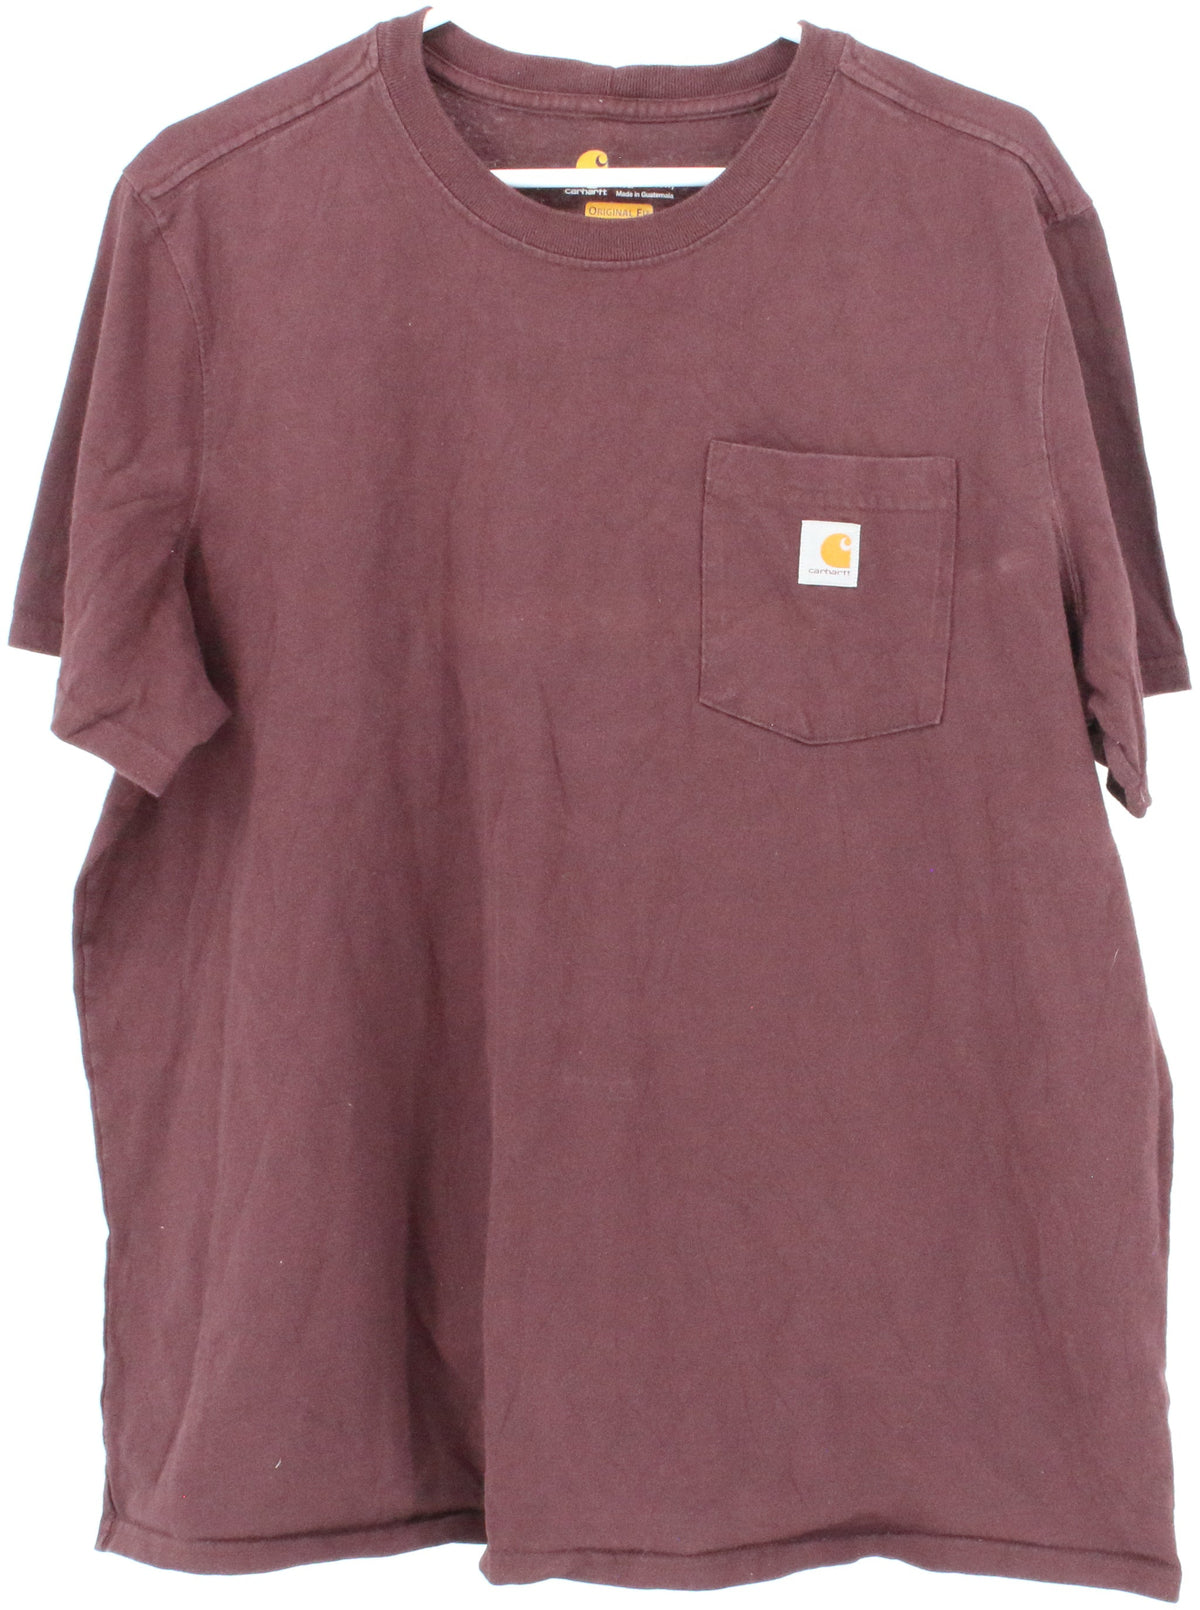 Carhartt Original Fit Burgundy Front Pocket T-Shirt